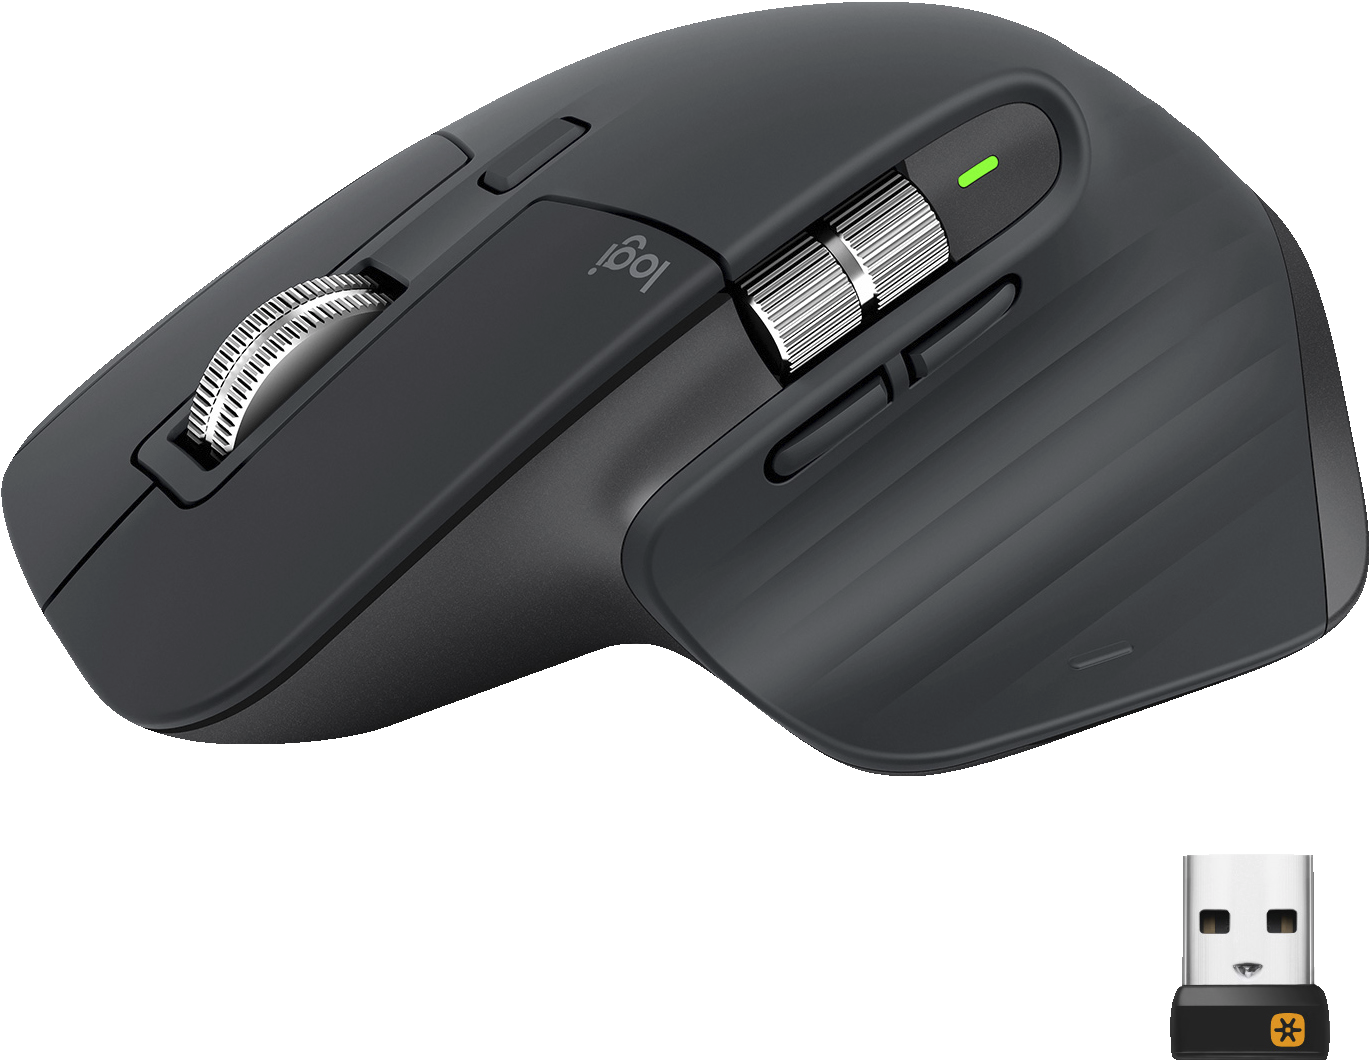 Logitech MX Master 3 trådløs mus (sort) - Mus og tastatur - Elgiganten